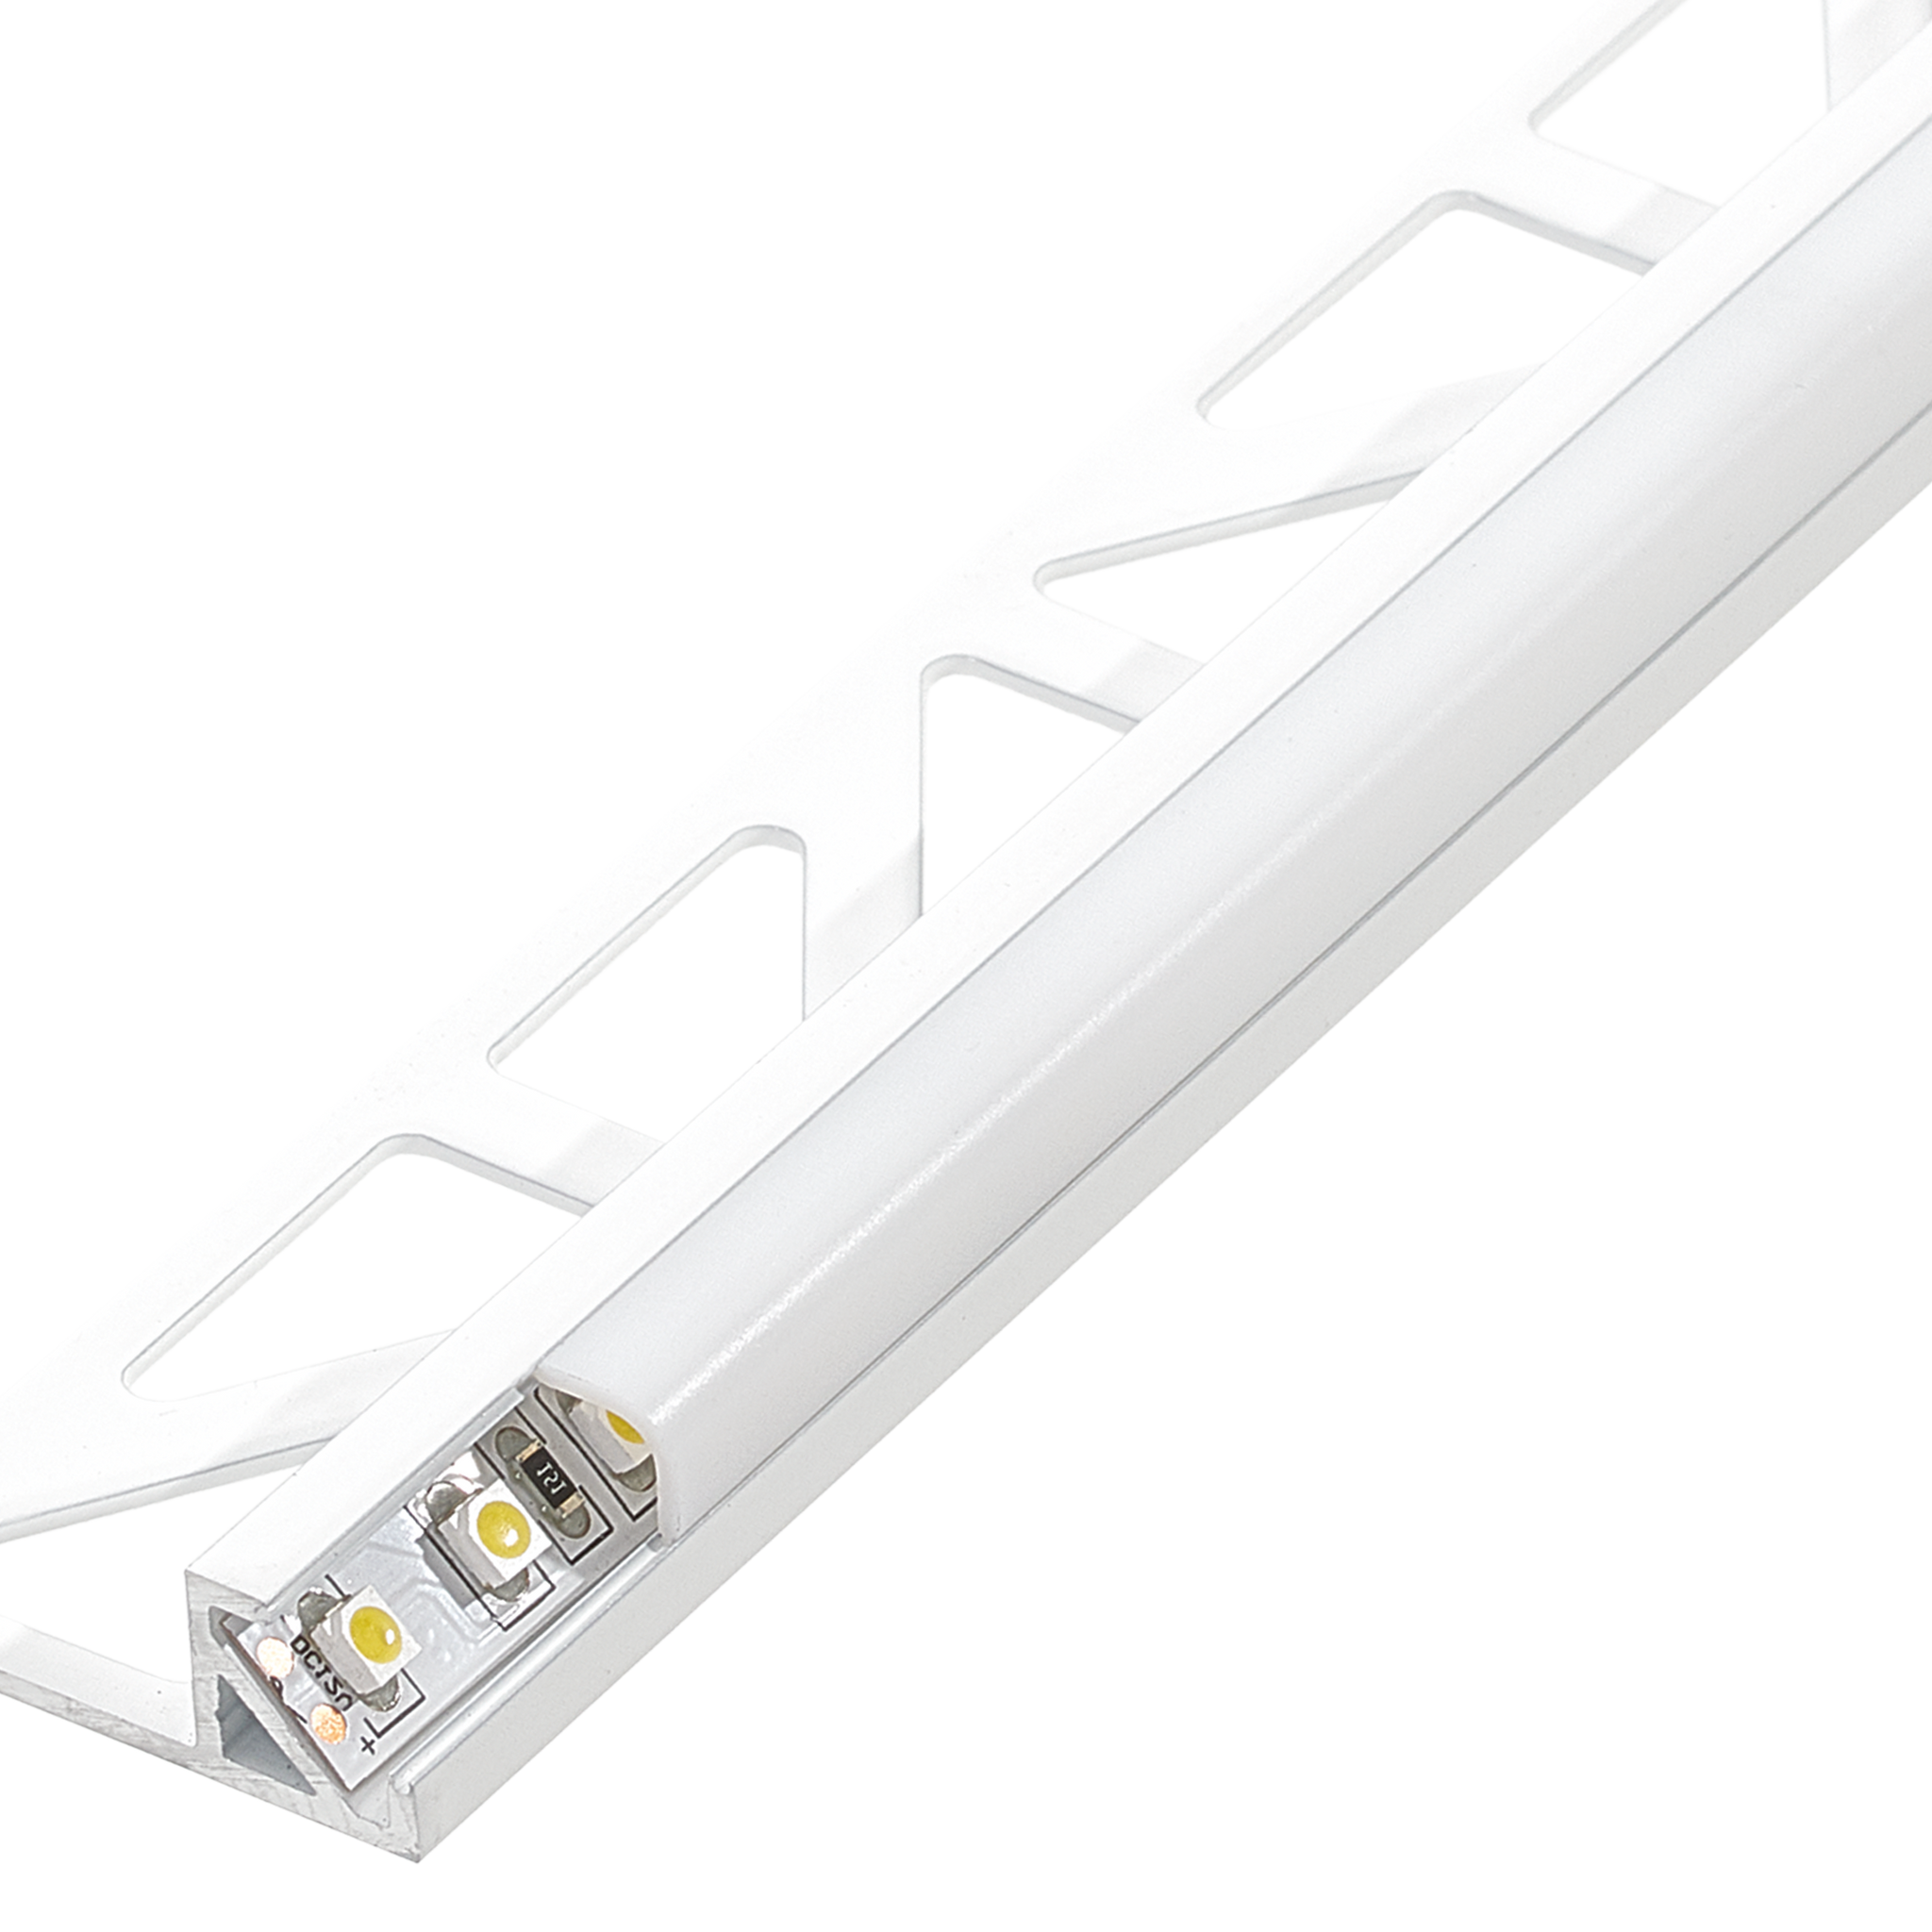 SQUARELINE LED Basic Edging Profile 7/16 in - White - Aluminum - Tile Edge Trim - by Dural